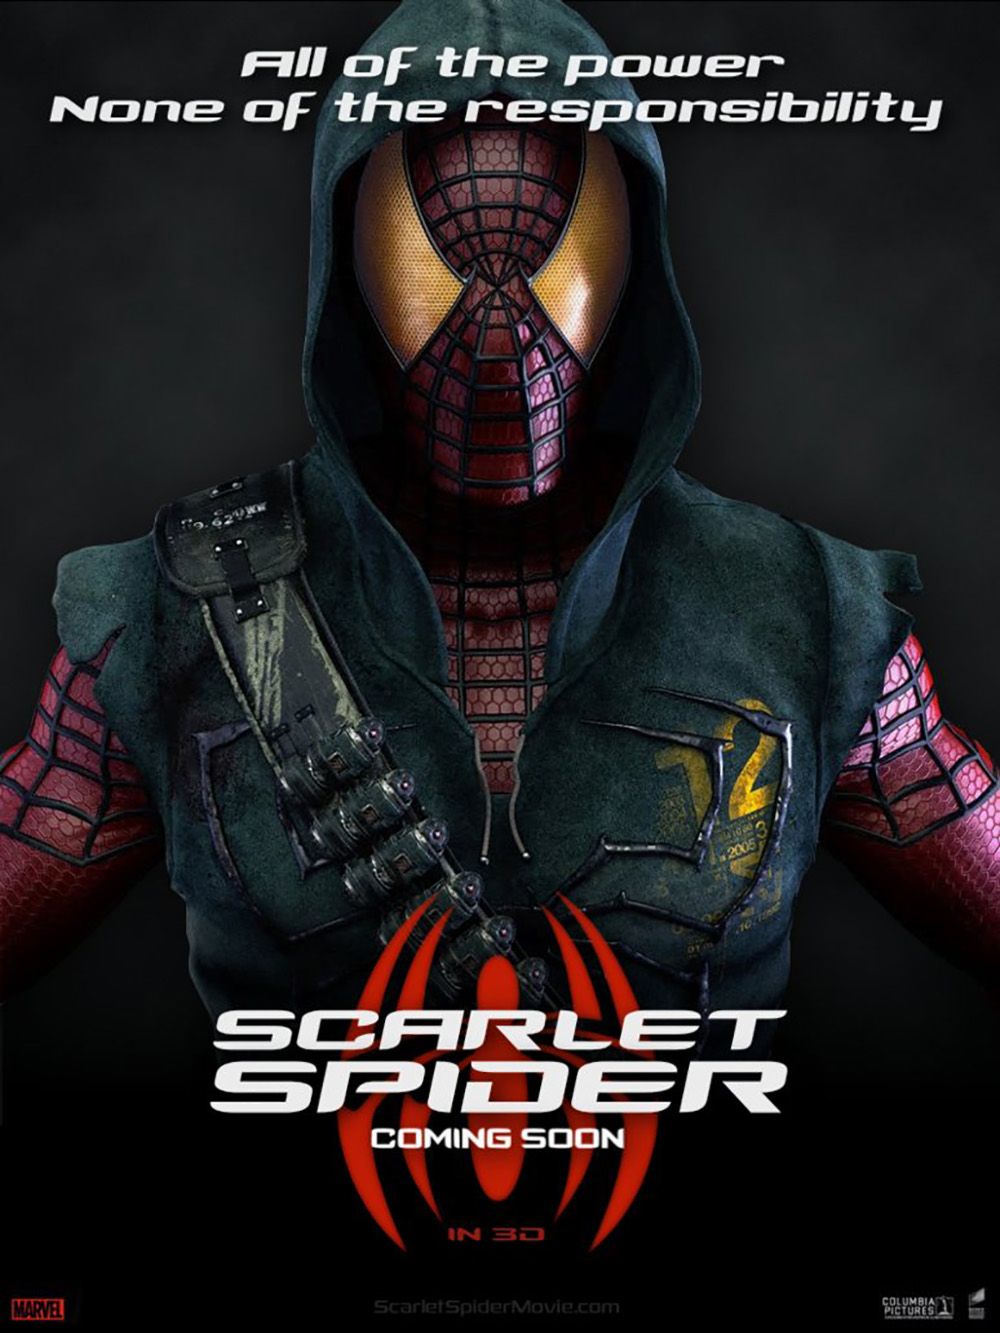 Scarlet Spider movie fan poster